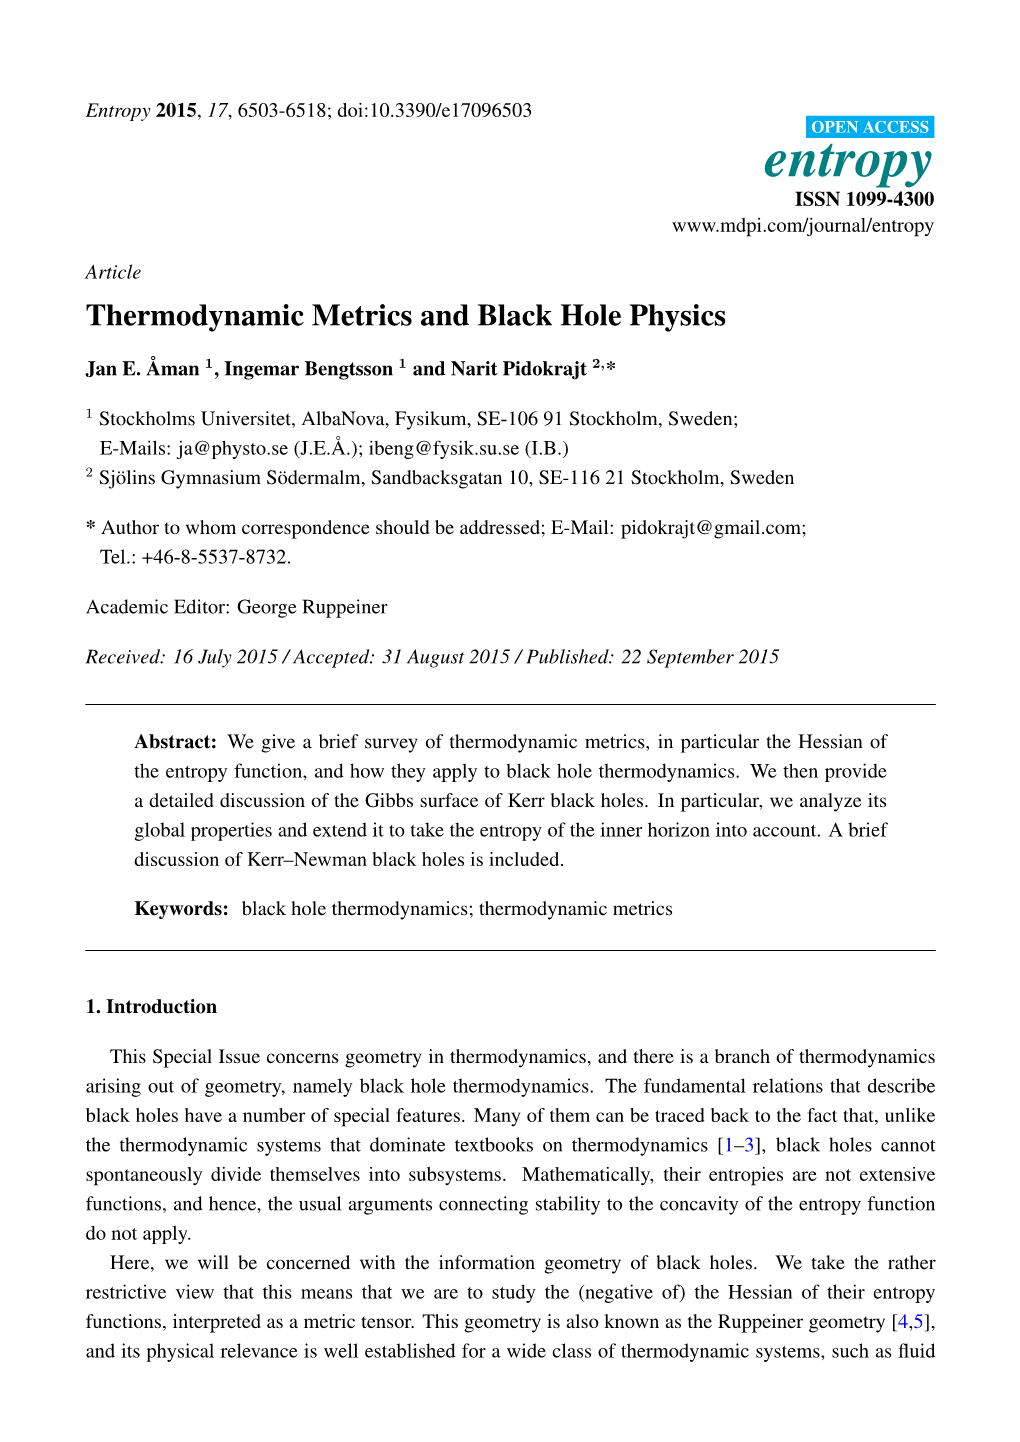 Thermodynamic Metrics and Black Hole Physics